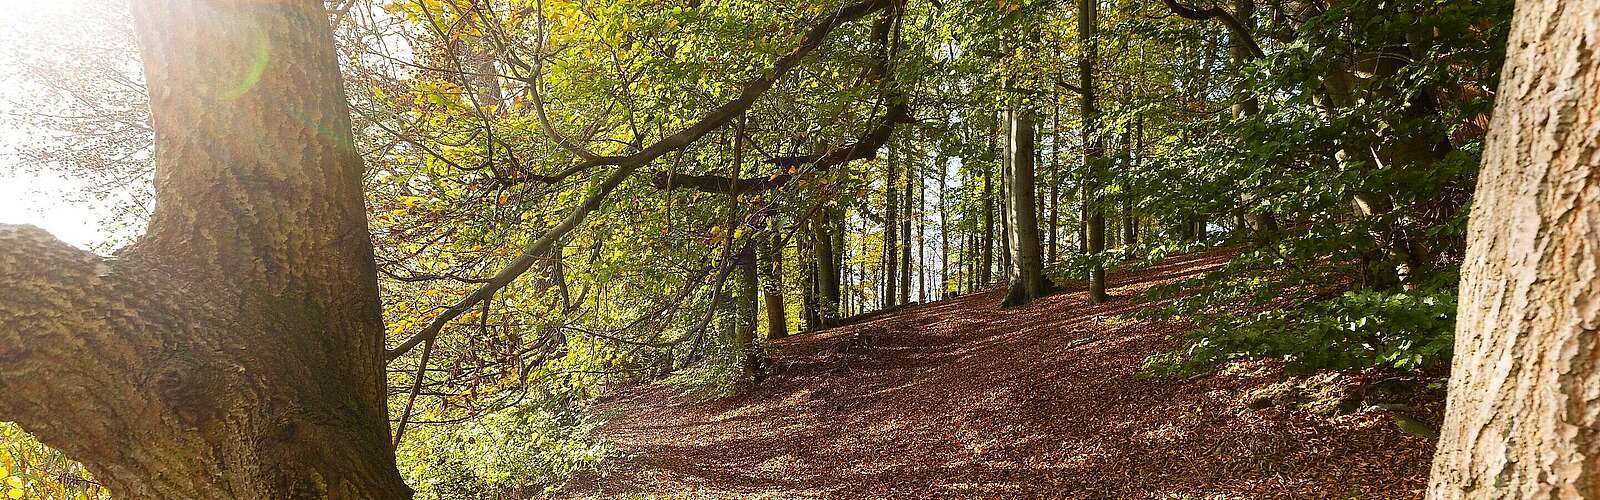 Herbstlicher Wald am Hellsee,
        
    

        Foto: Fotograf / Lizenz - Media Import/Steffen Lehmann